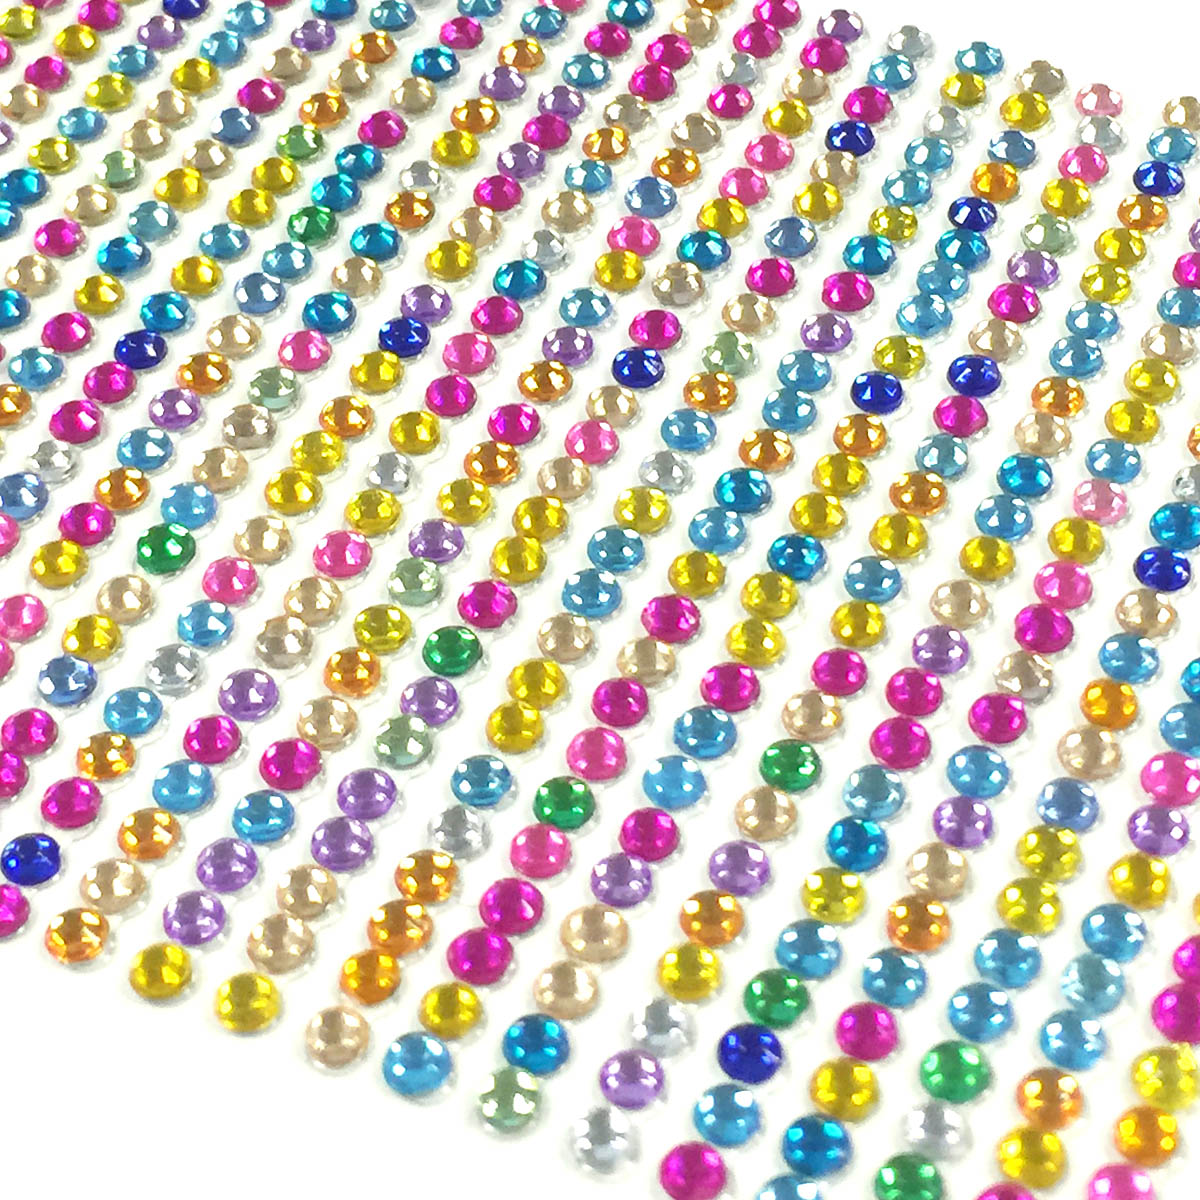 Wrapables 750-Piece Adhesive Rhinestone Crystal Diamond Sticker, 3mm, Multi-Color